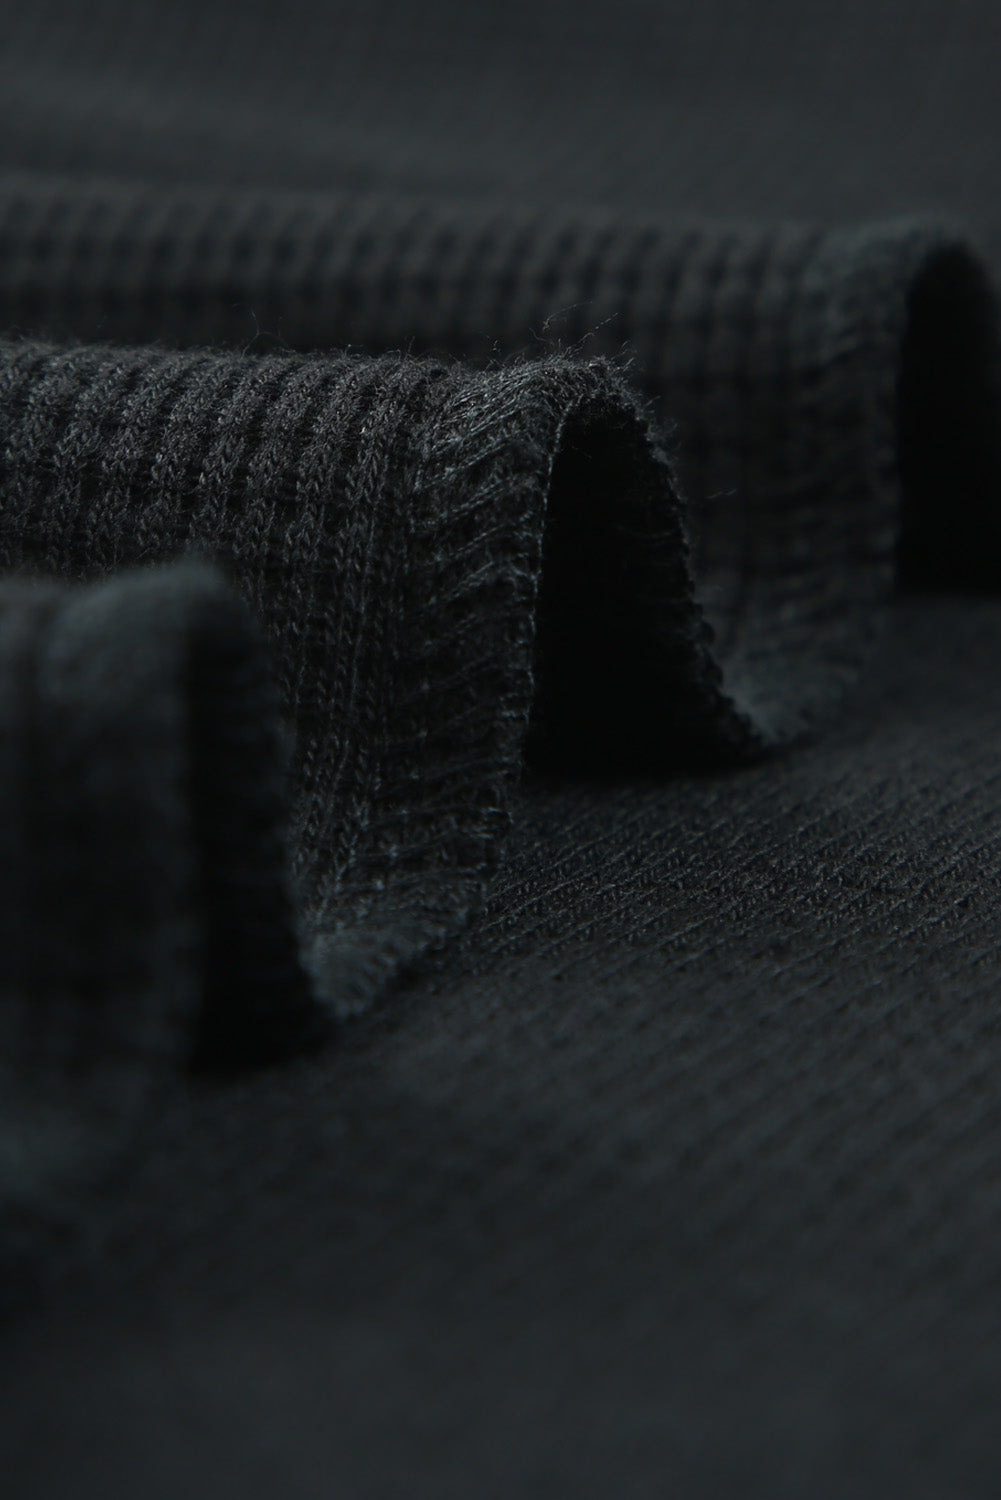 Black Ribbed Zipper Sweatshirt & High Waist Shorts Set